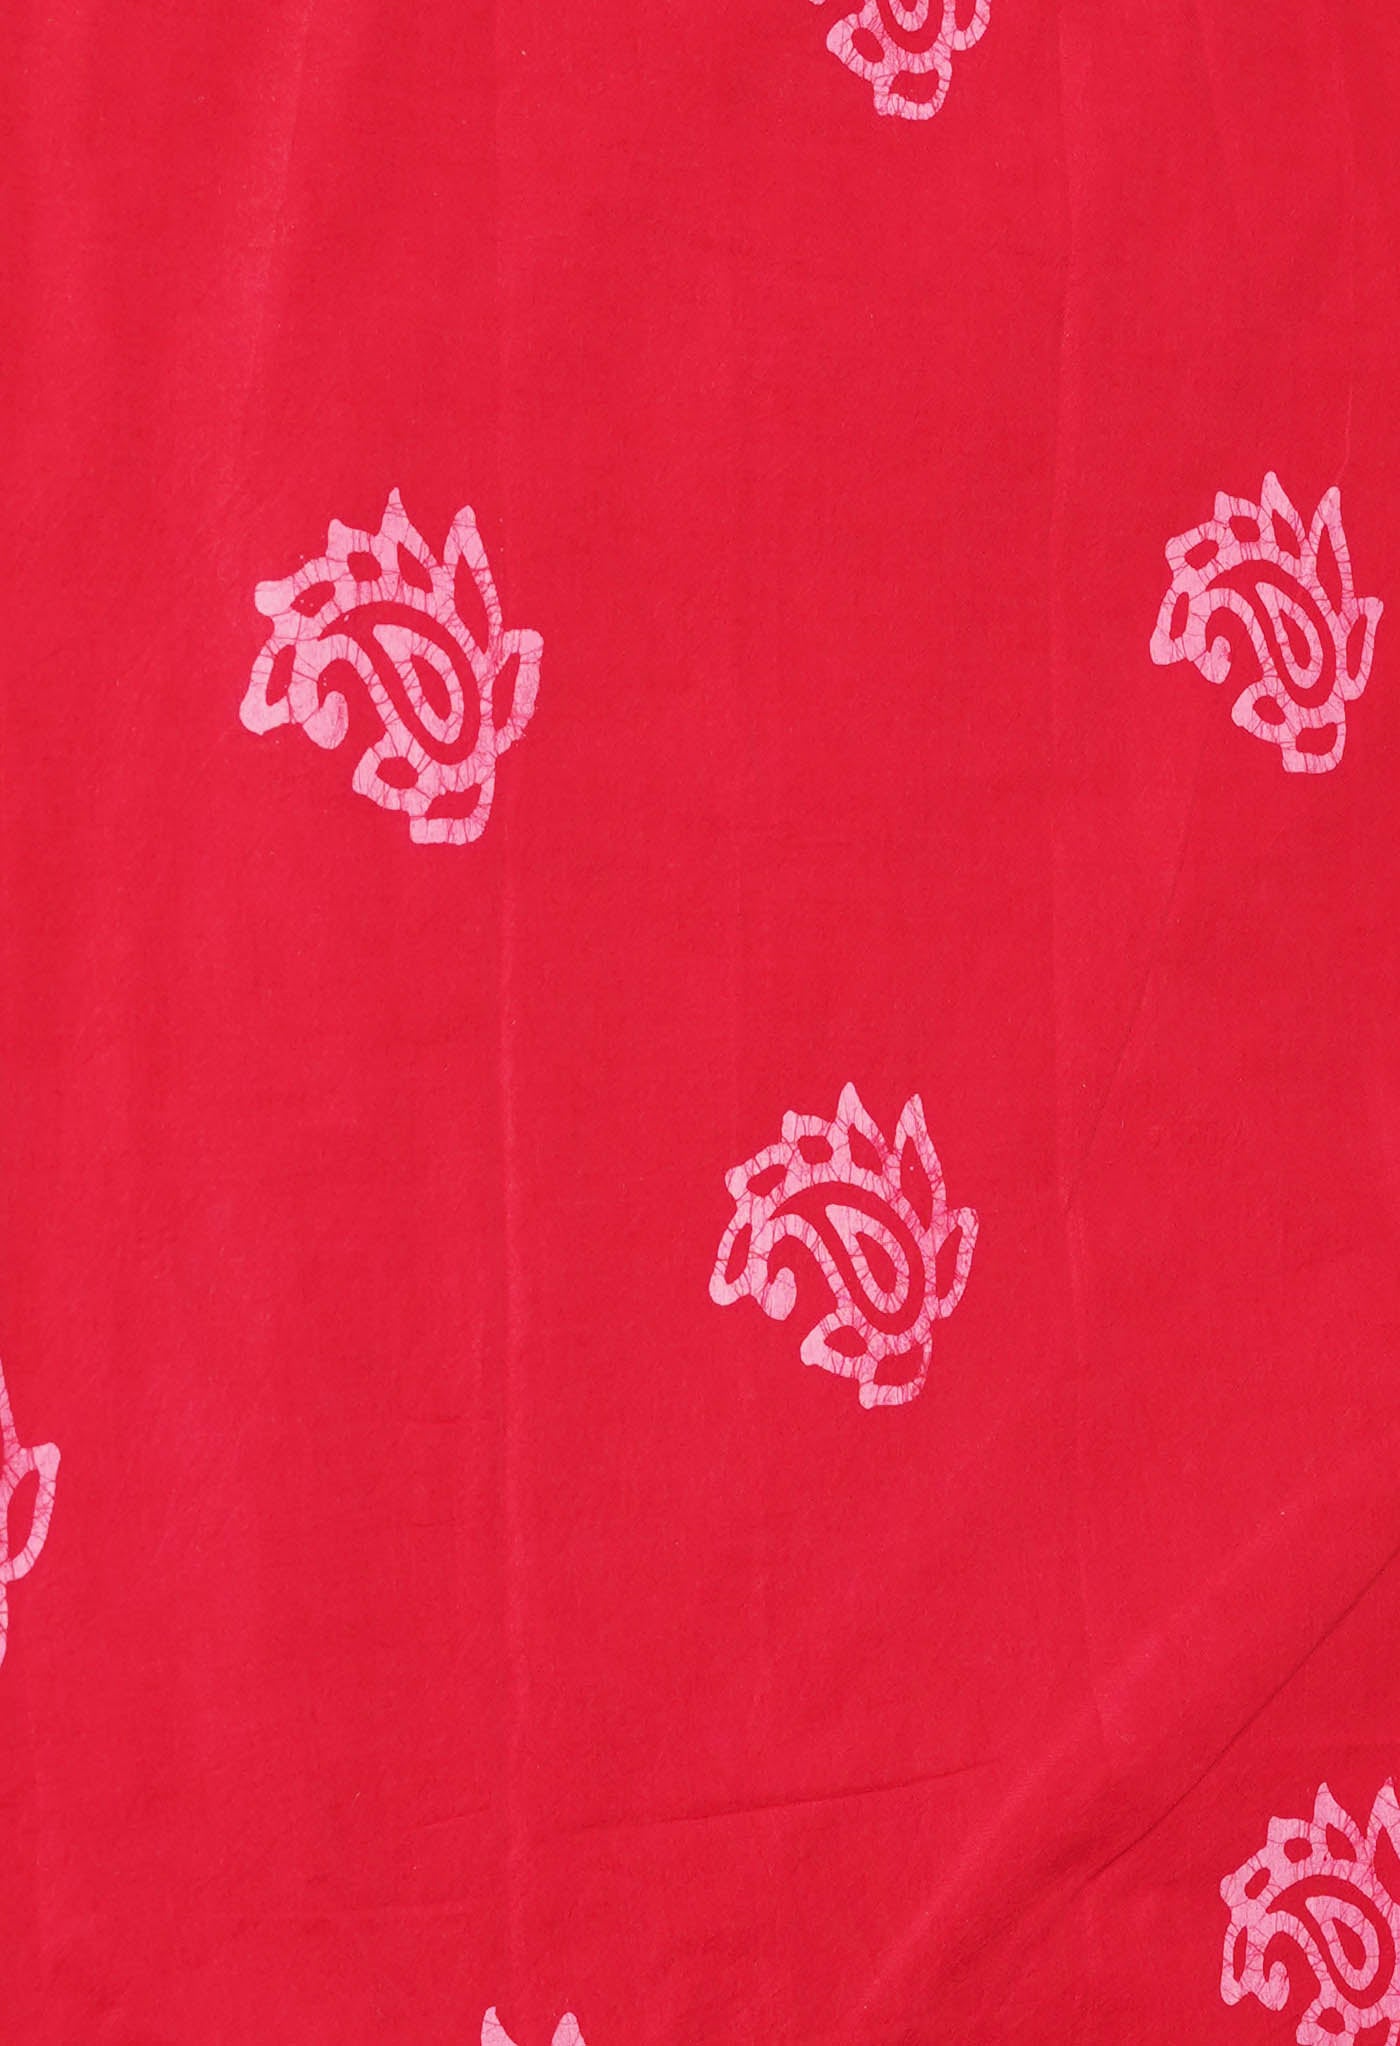 Pink-Red Pure  Wax Batik Hand Block Printed Superfine Mulmul Cotton Saree